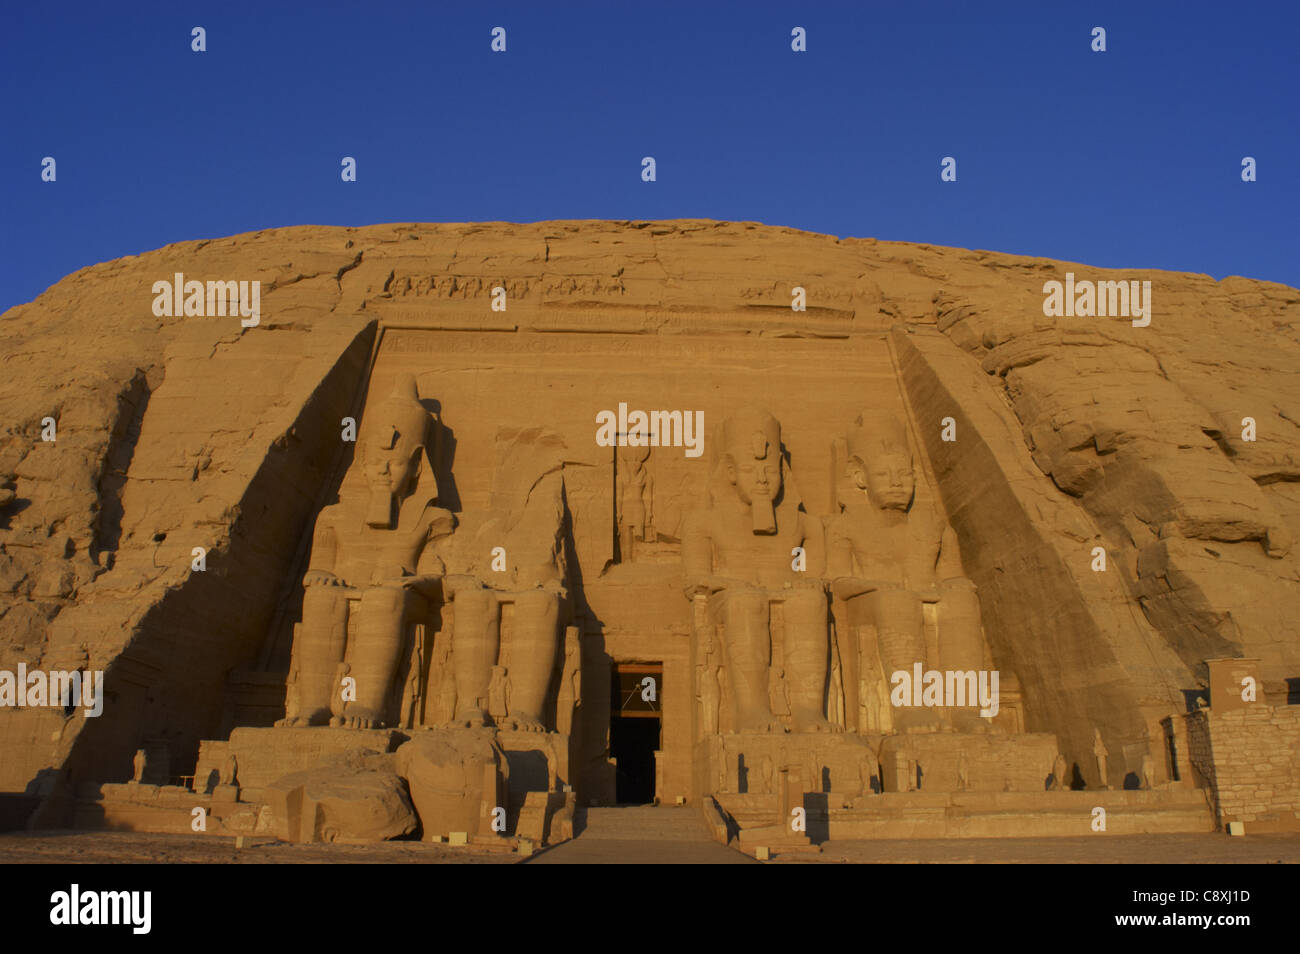 Egyptian art. Great Temple of Ramses II. Four colossal statues depicting the pharaoh Ramses II (1290-1224 BC). Abu Simbel. Egypt Stock Photo